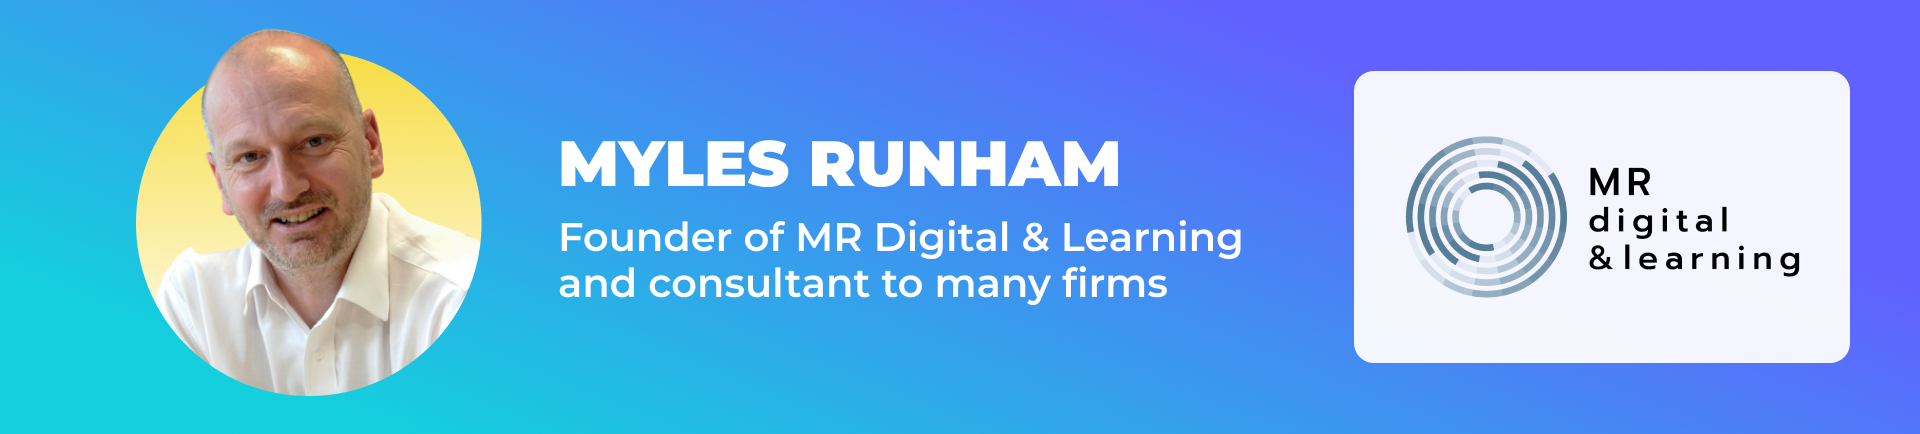 Myles Runham - Experts round-up